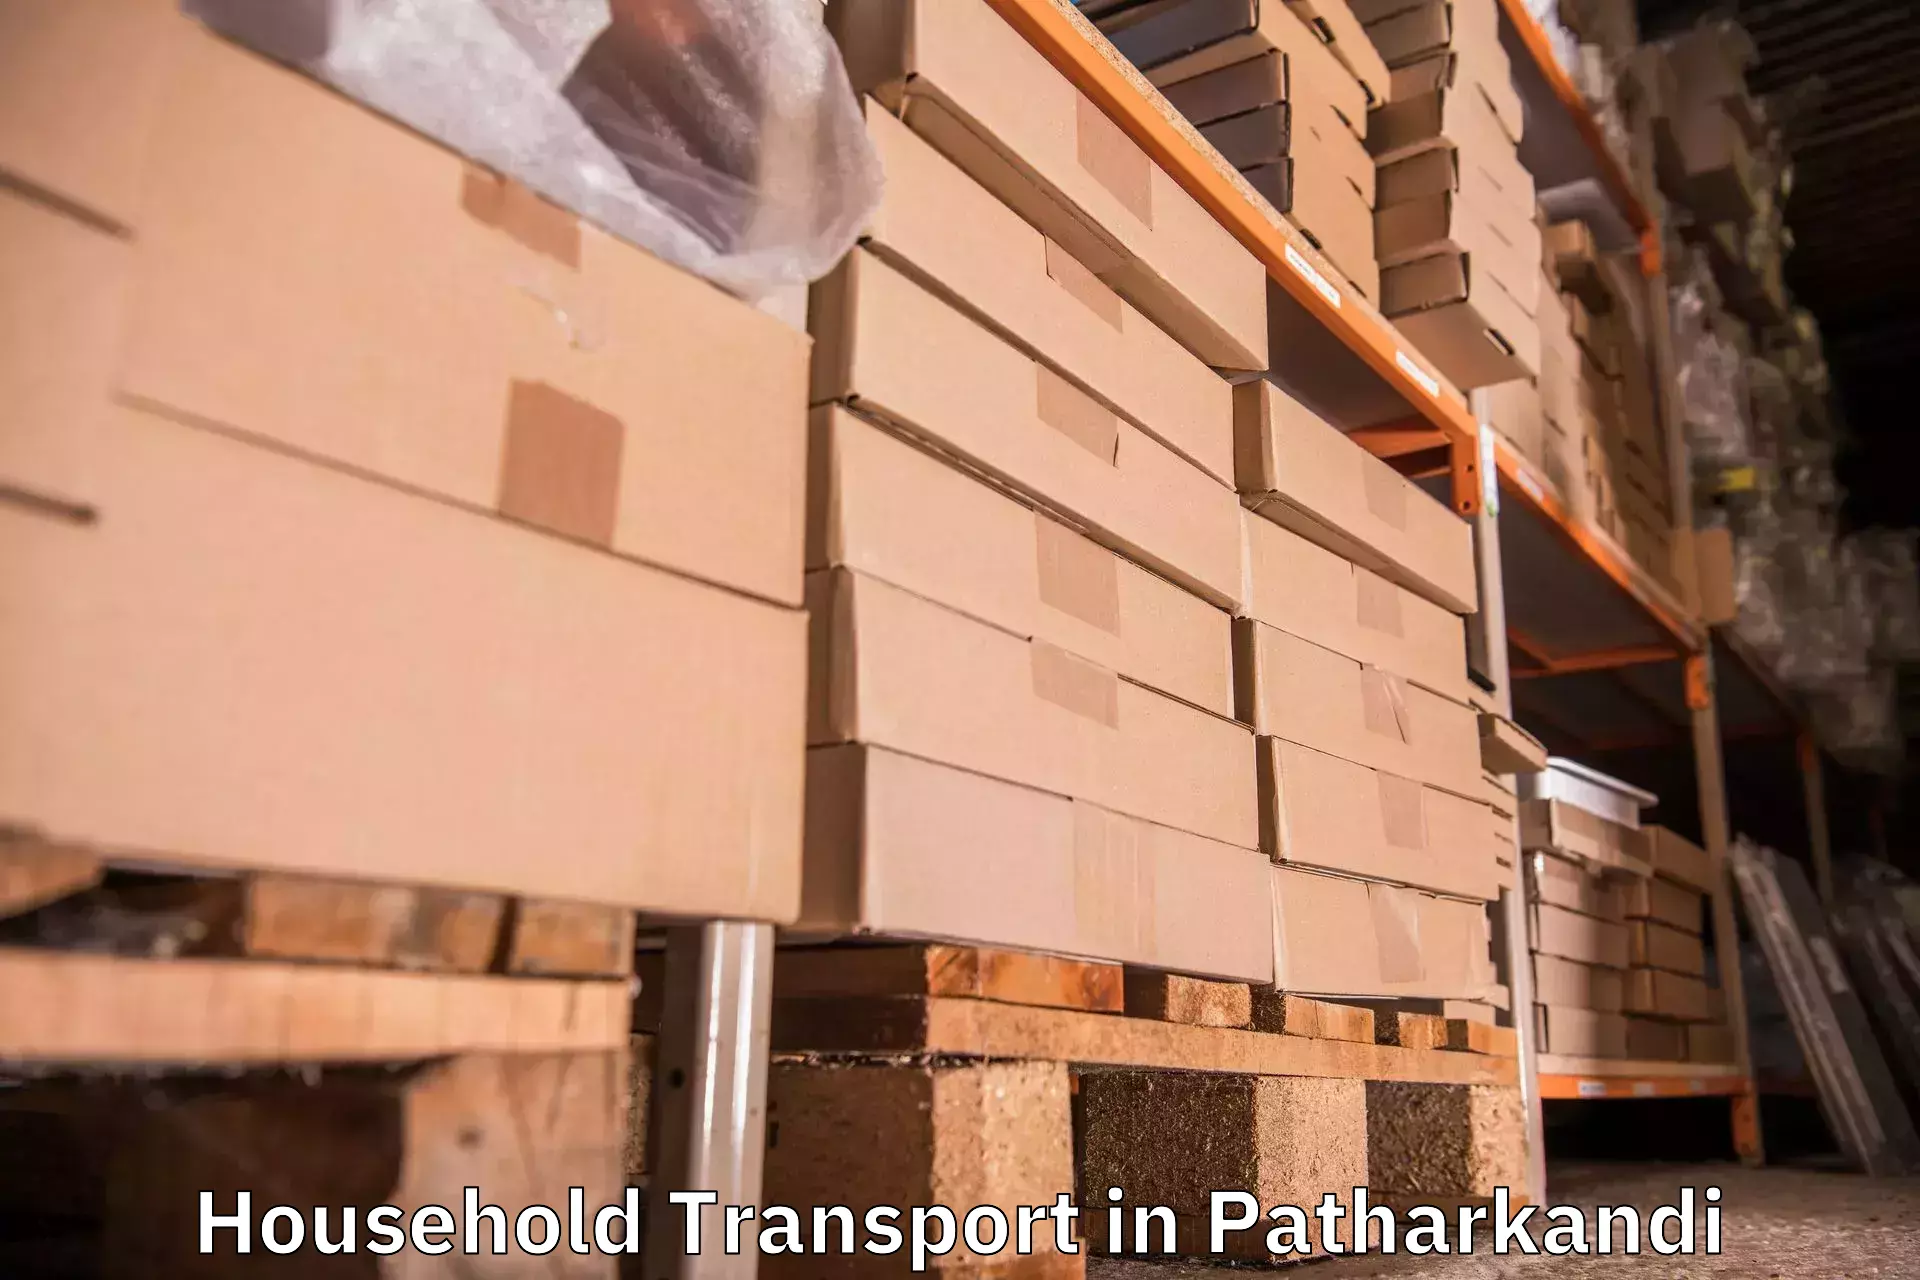 Household goods transporters in Patharkandi